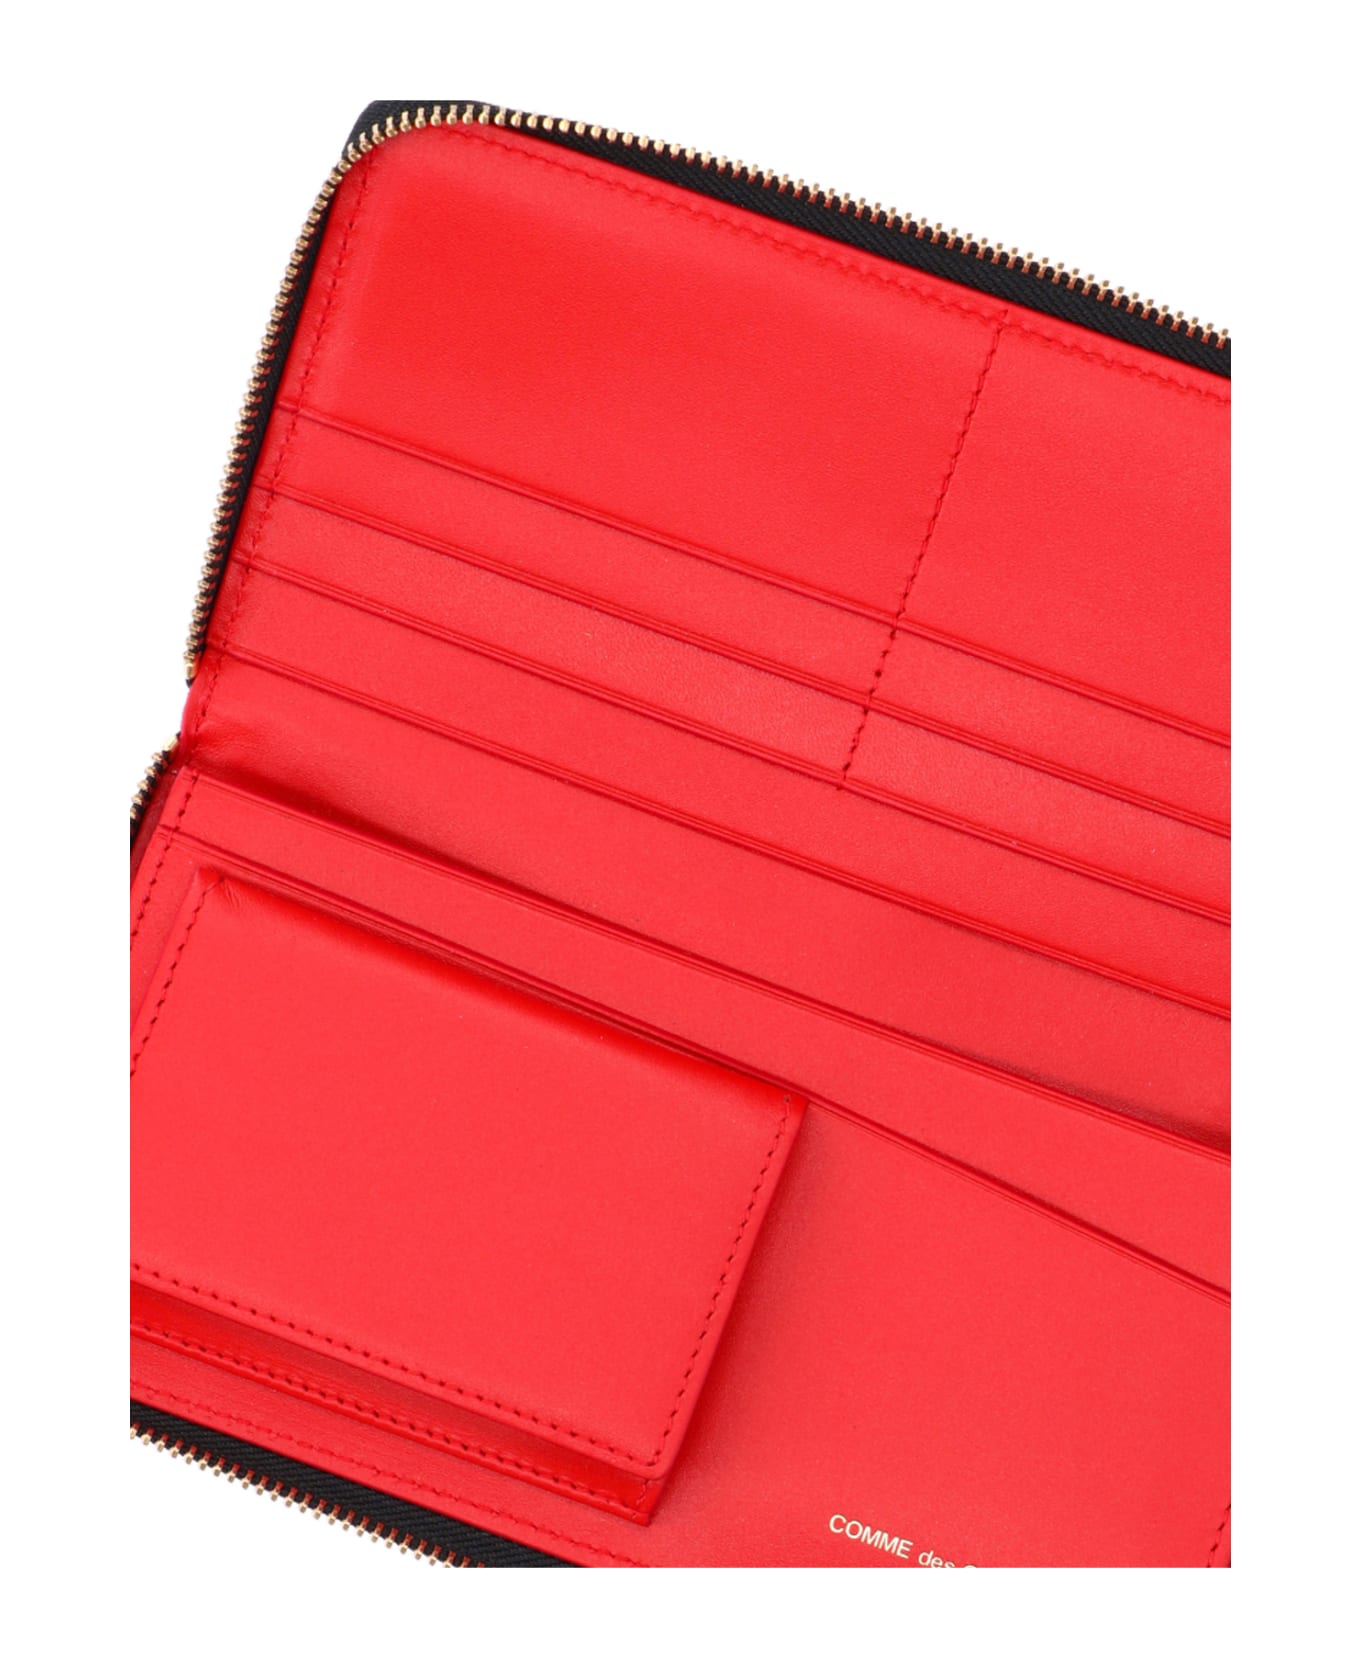 Comme des Garçons Wallet Logo Wallet - Red 財布